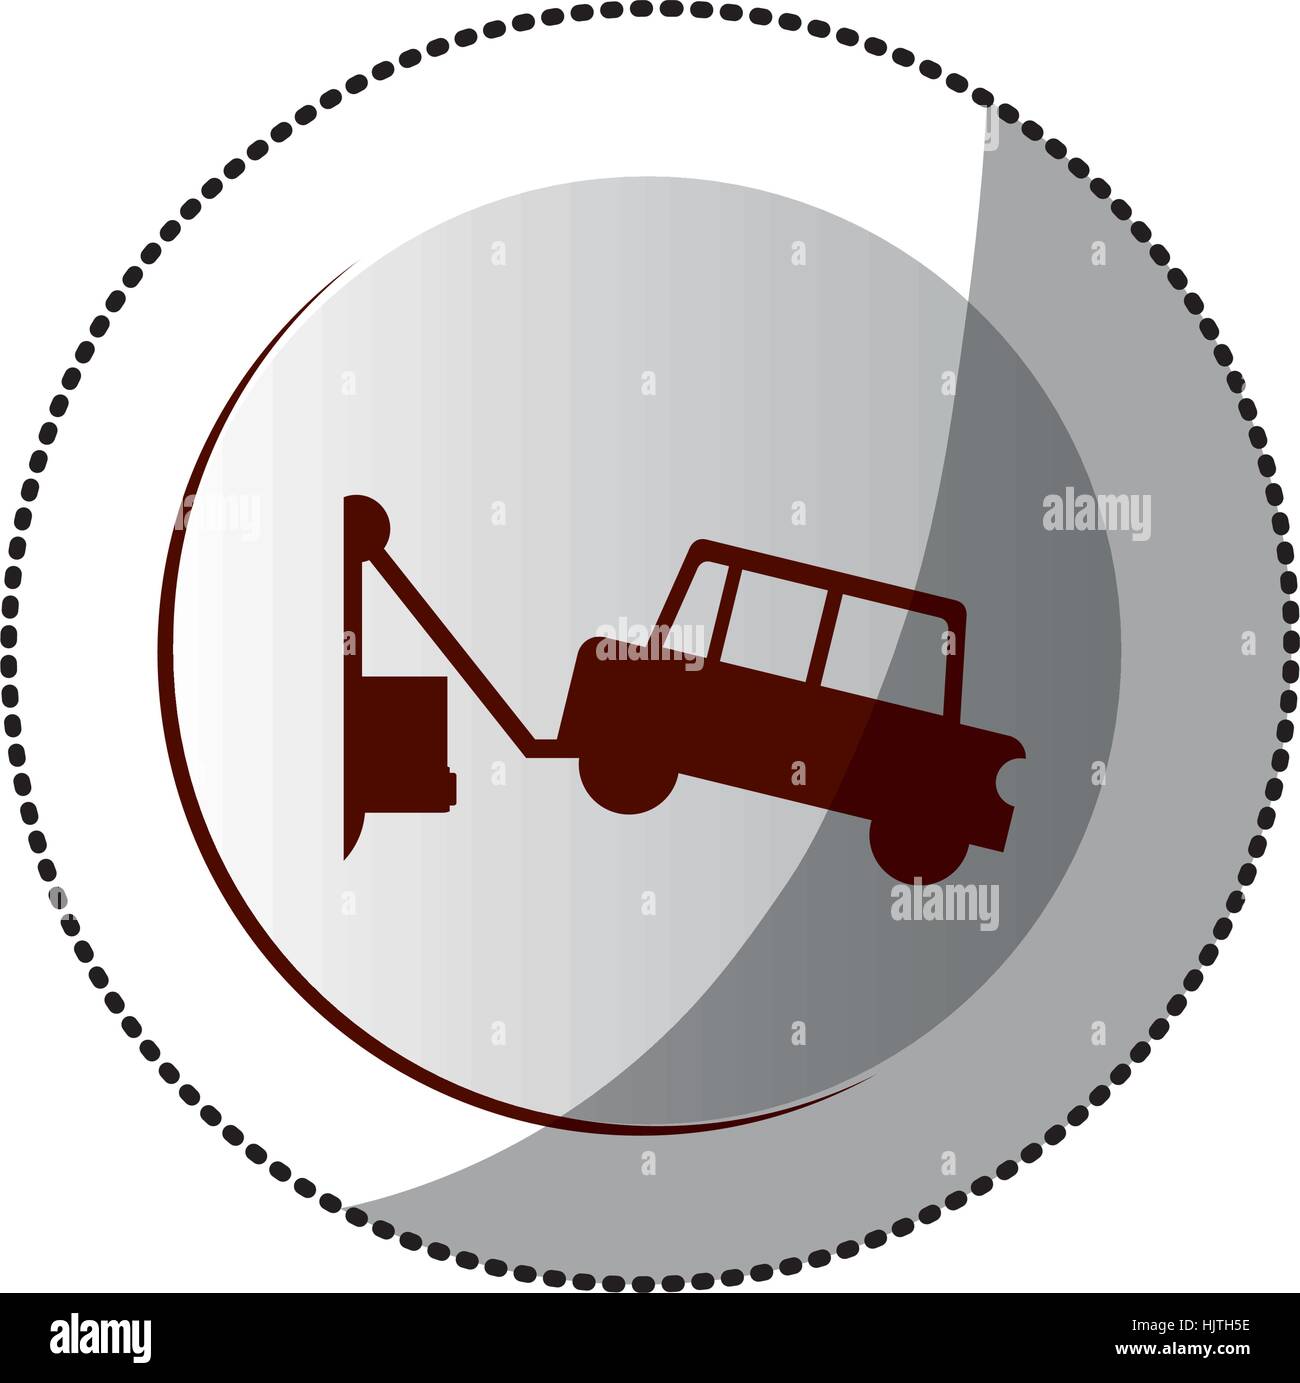 Towing a car icon vector illustration graphic design Stock Vector